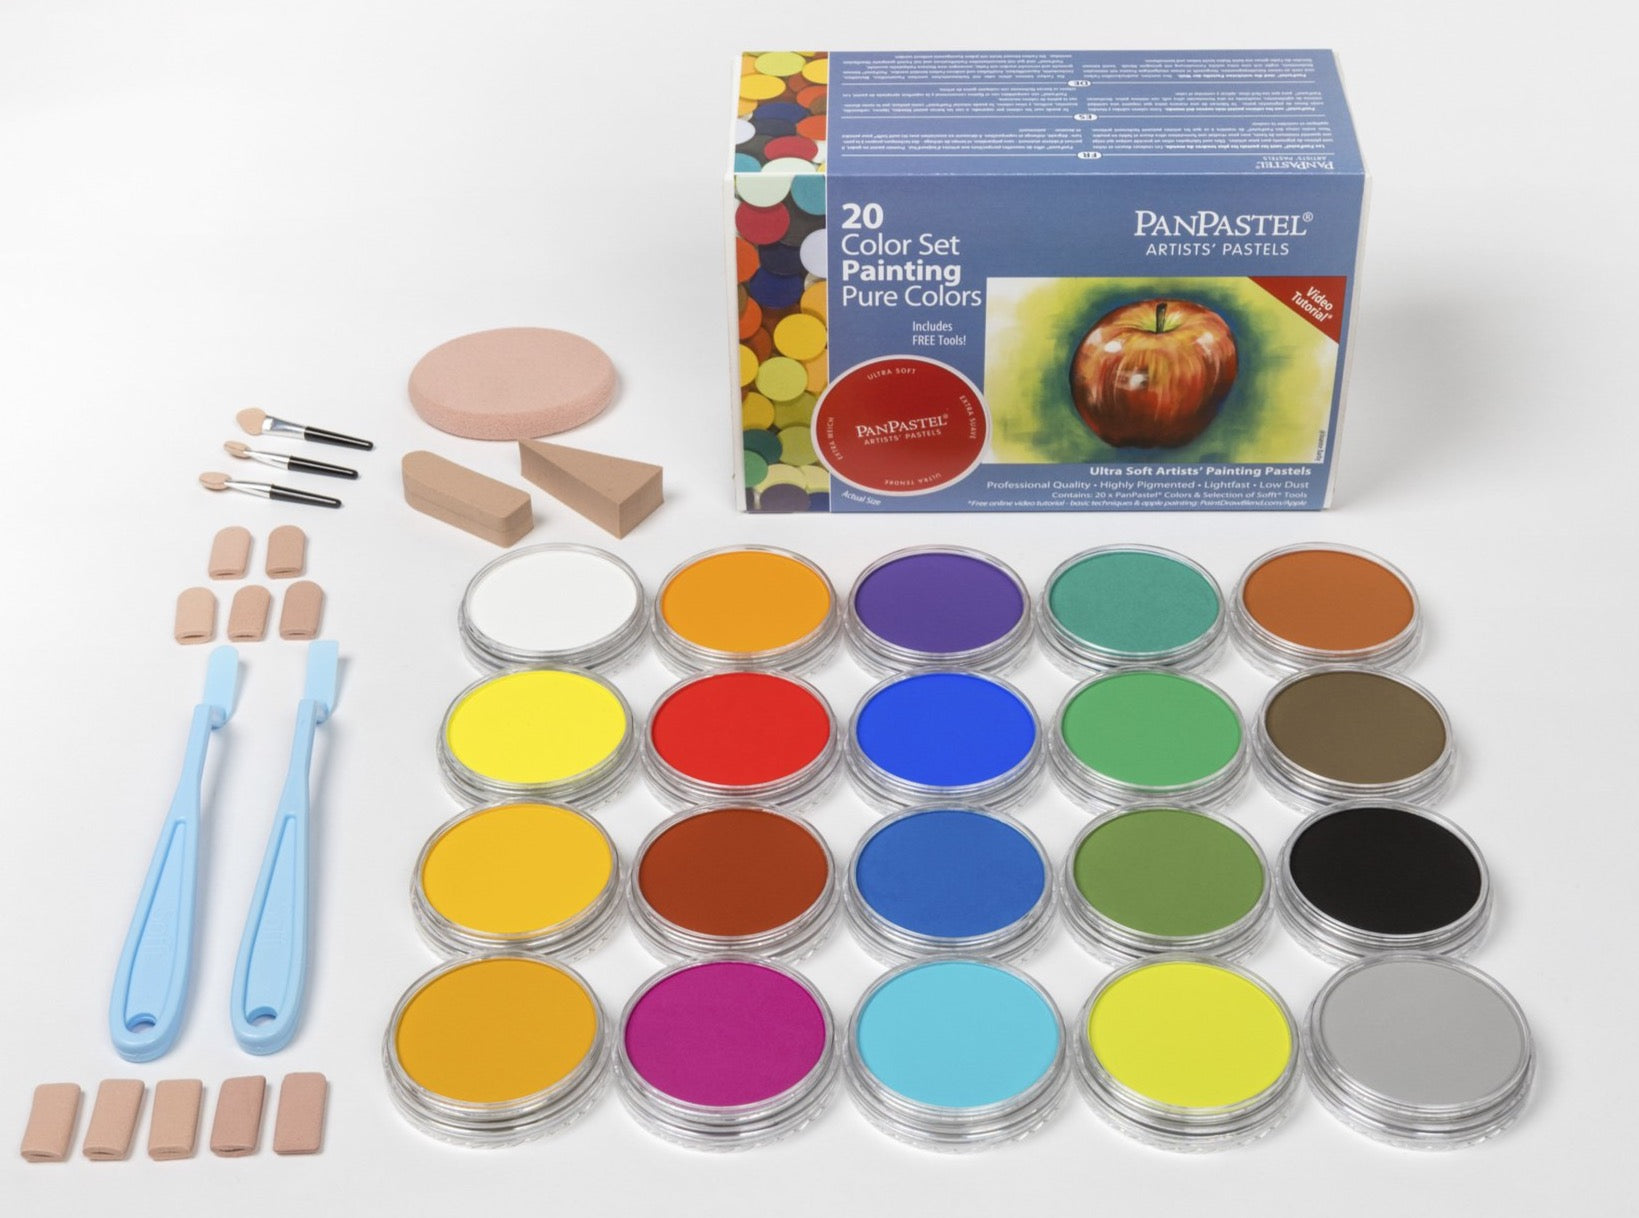 PanPastel 30201 set of 20 Pans Painting Pure Colours